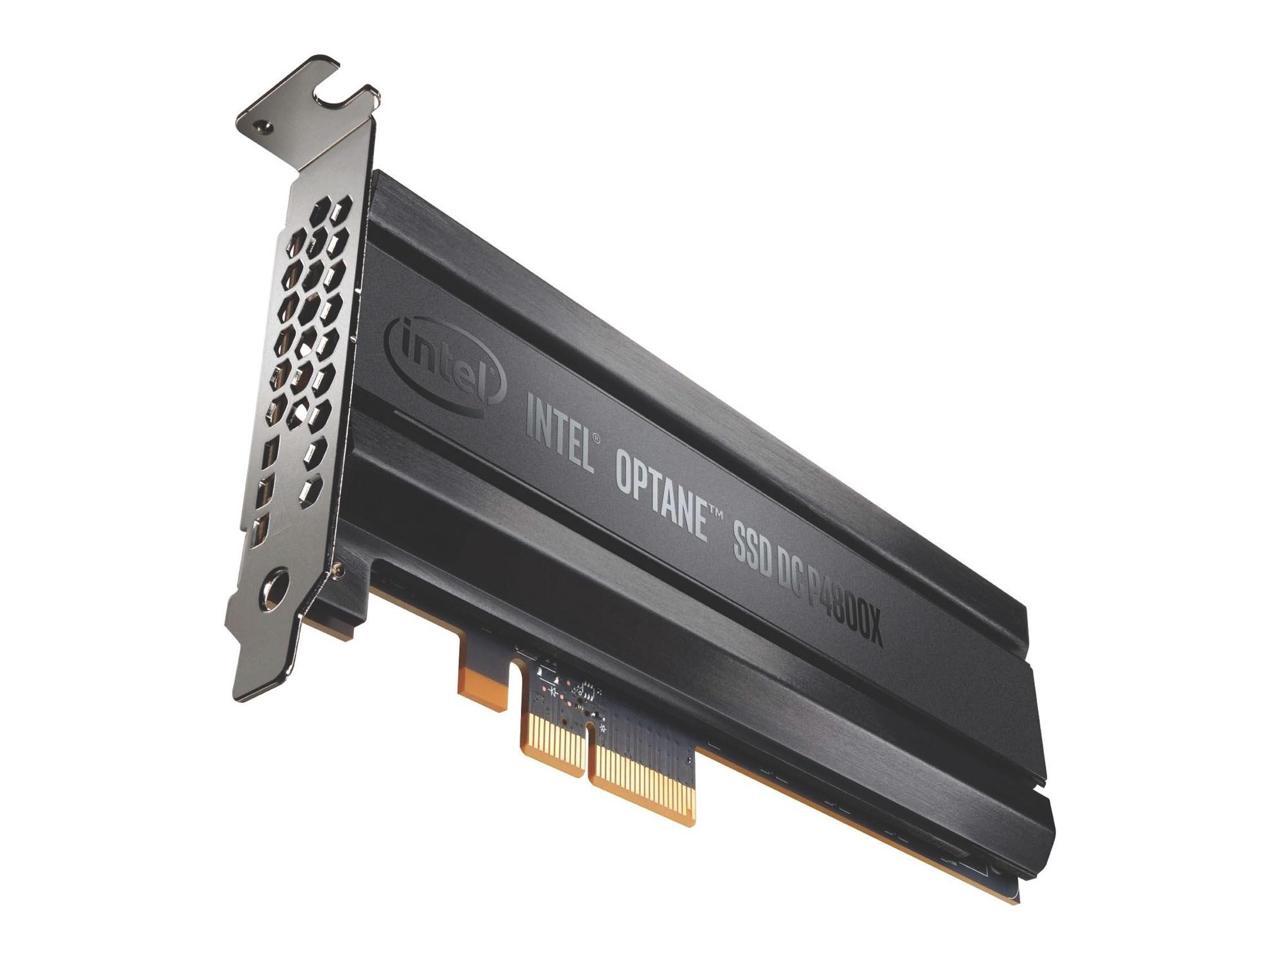 Intel Optane Dc P4800X 375 Gb Solid State Drive - Internal - Pci Express (Pci Express 3.0 X4)